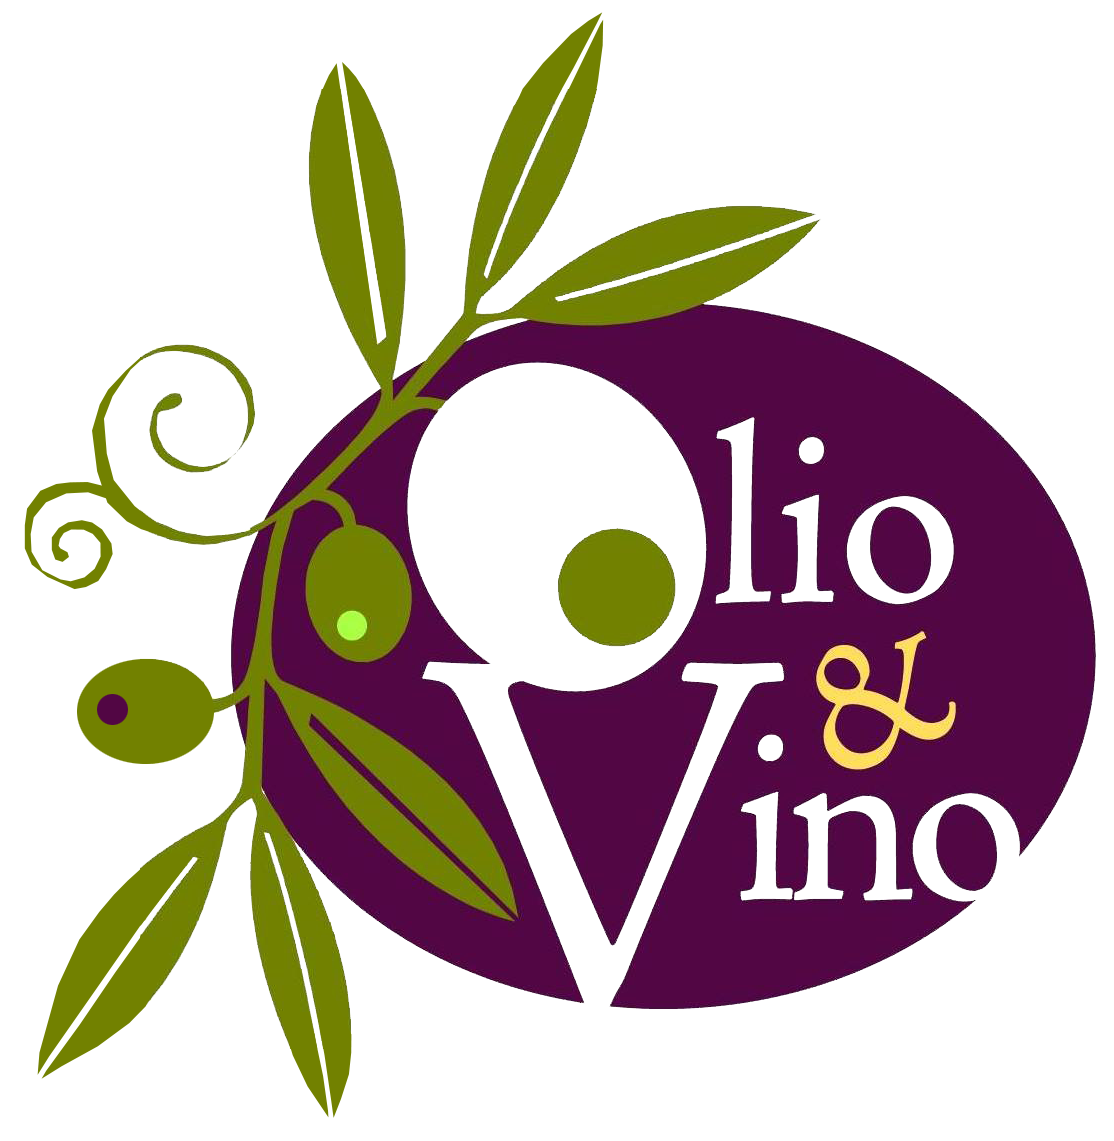 Olio & Vino – Peoria Olive Oil and Balsamic Vinegar Store Logo